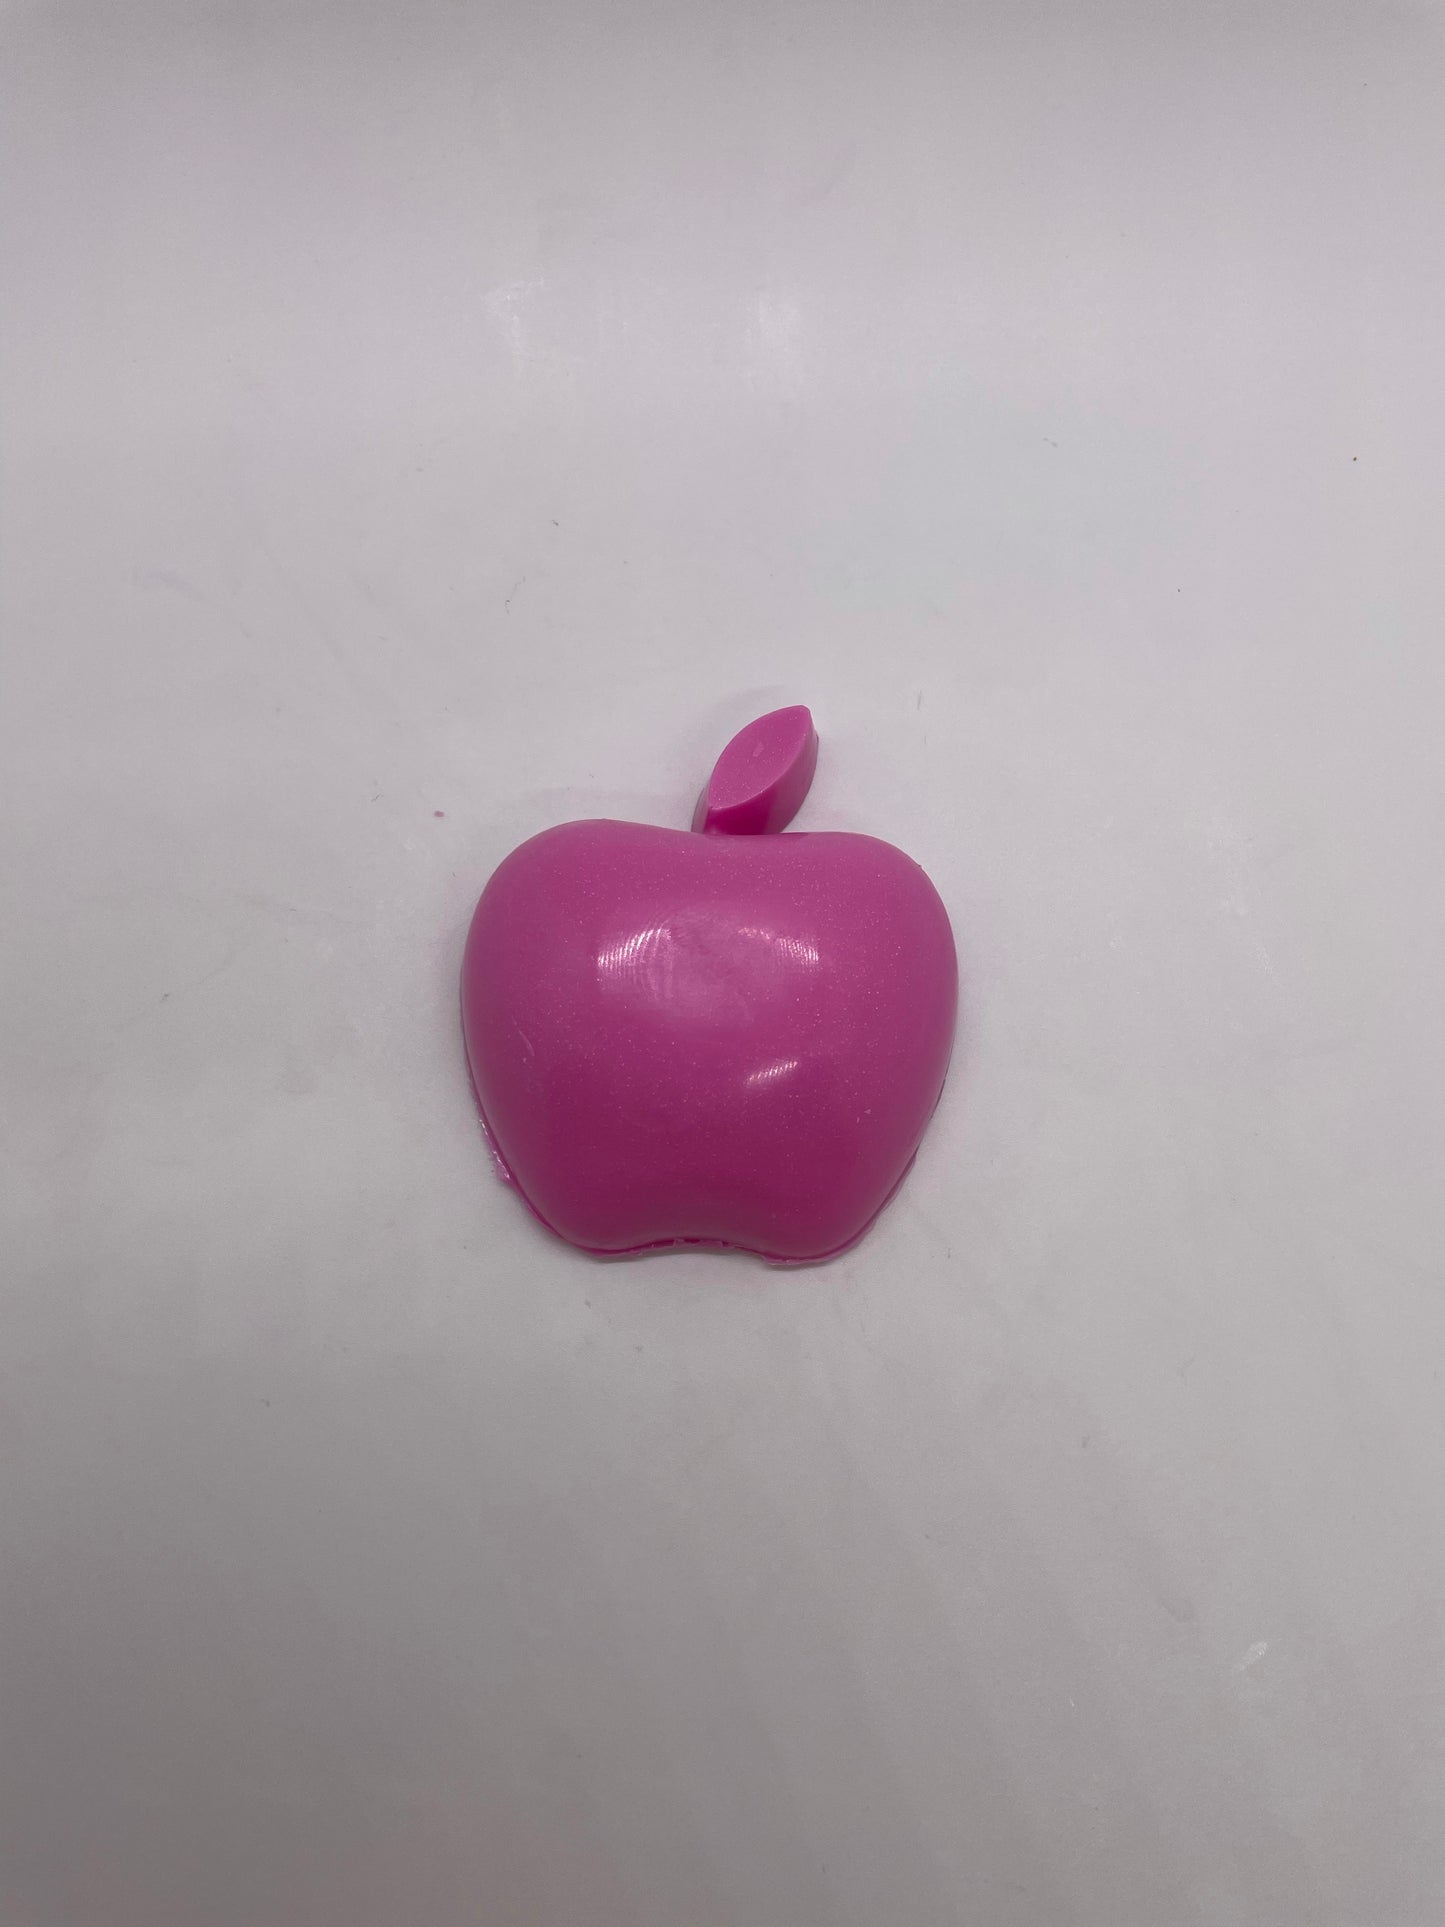 Apple Soap Bar VARIES IN COLORS